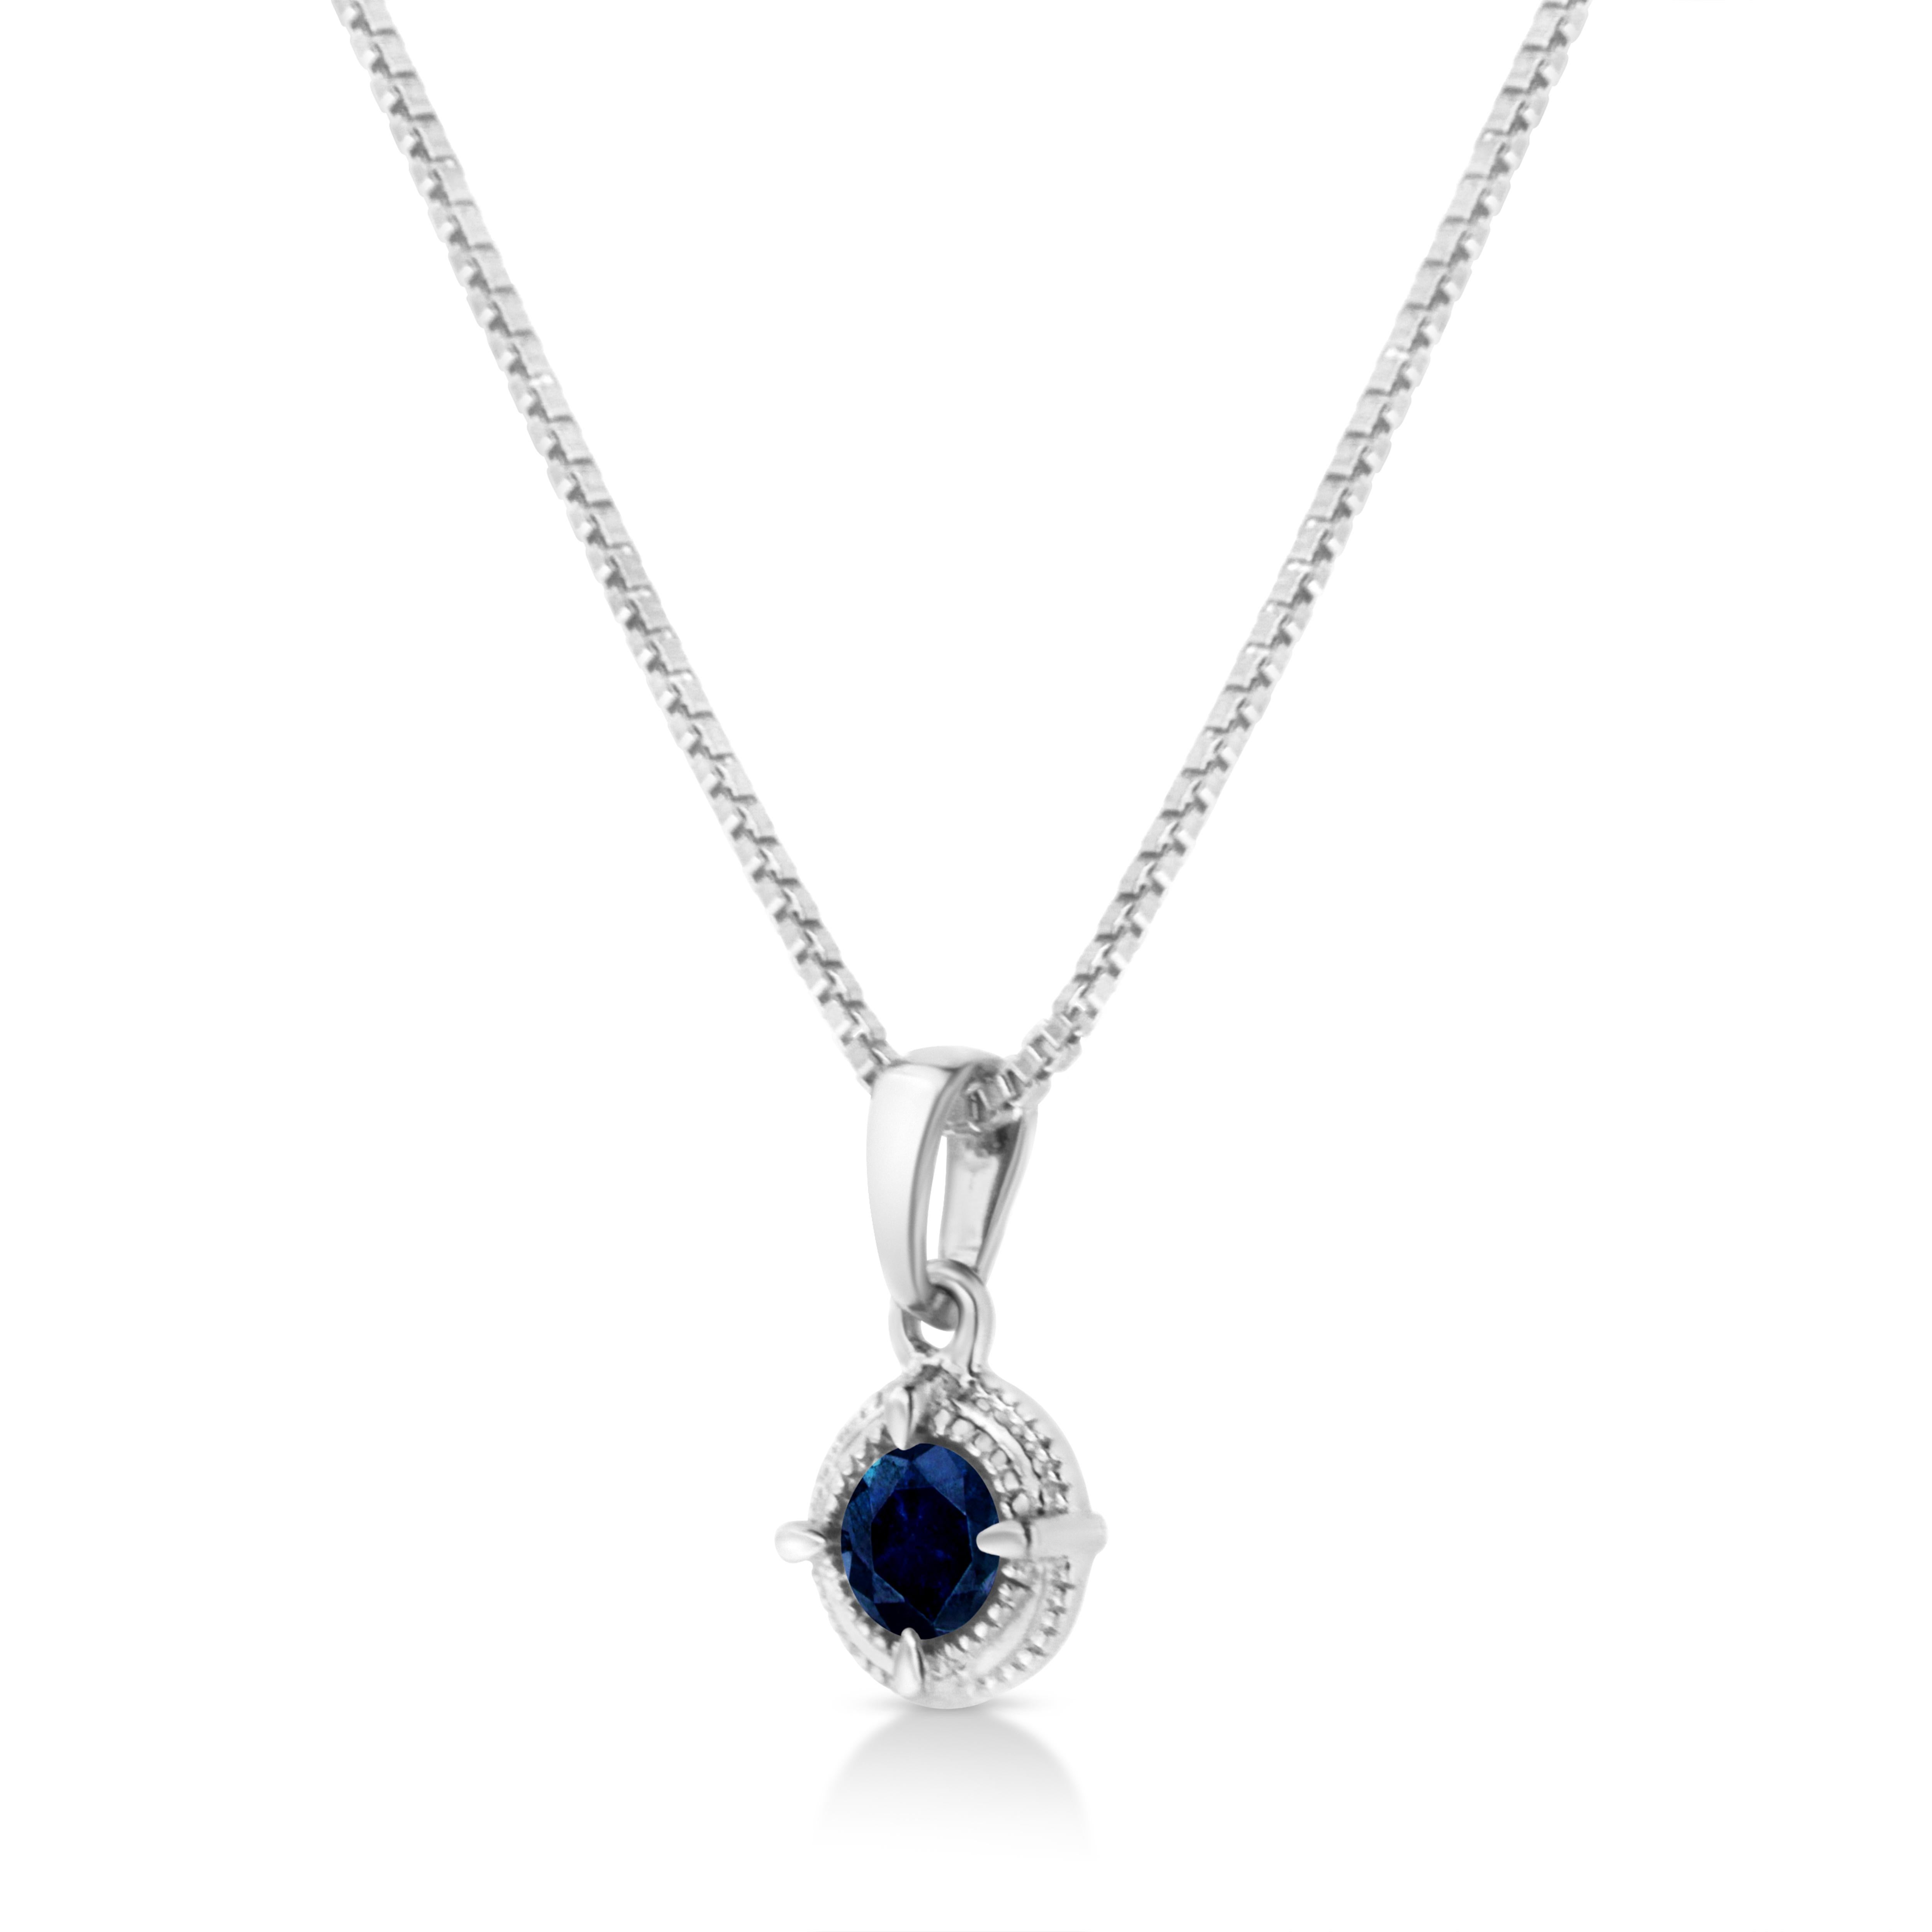 Contemporary .925 Sterling Silver 3/4 Carat Treated Blue Diamond Milgrain Pendant Necklace For Sale